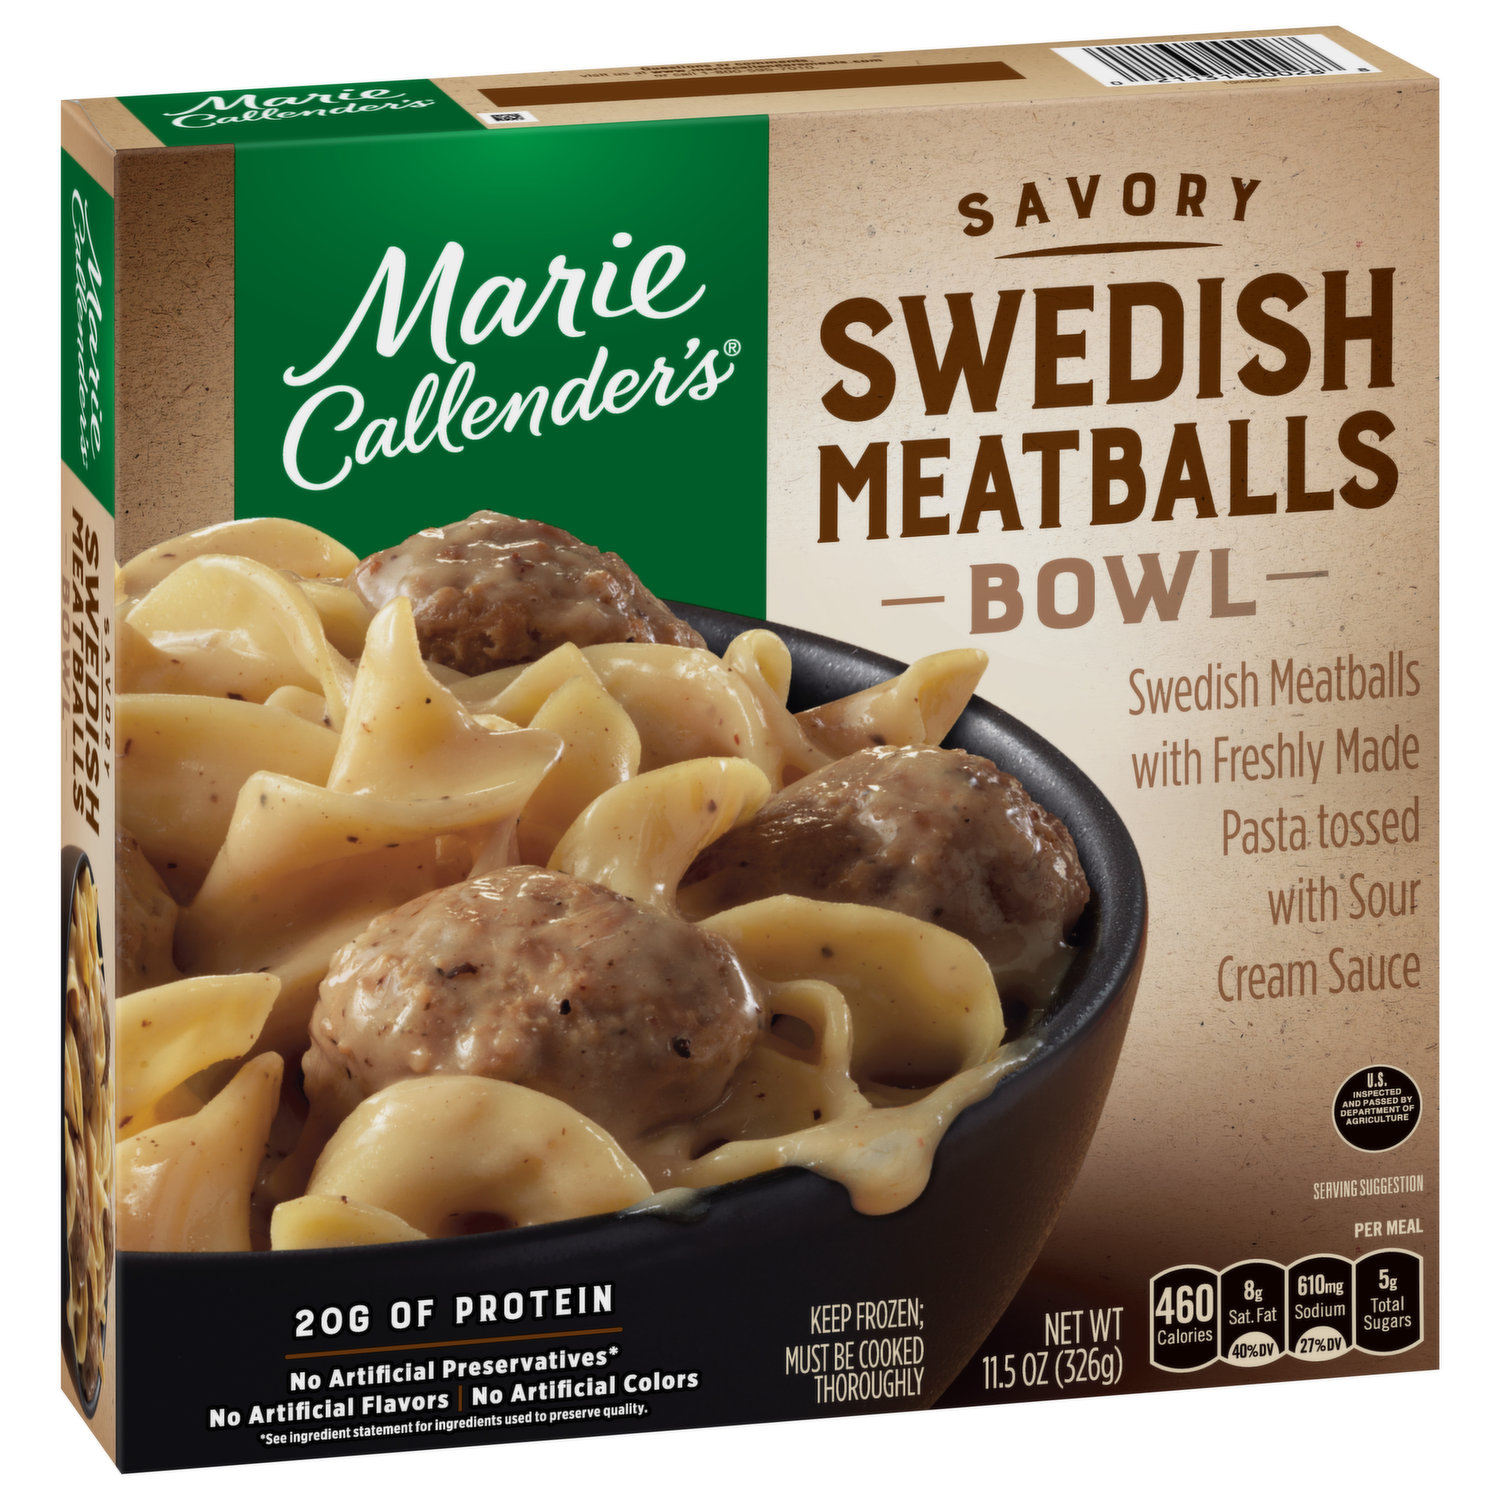 Marie Callender's Savory Swedish Meatballs Bowl